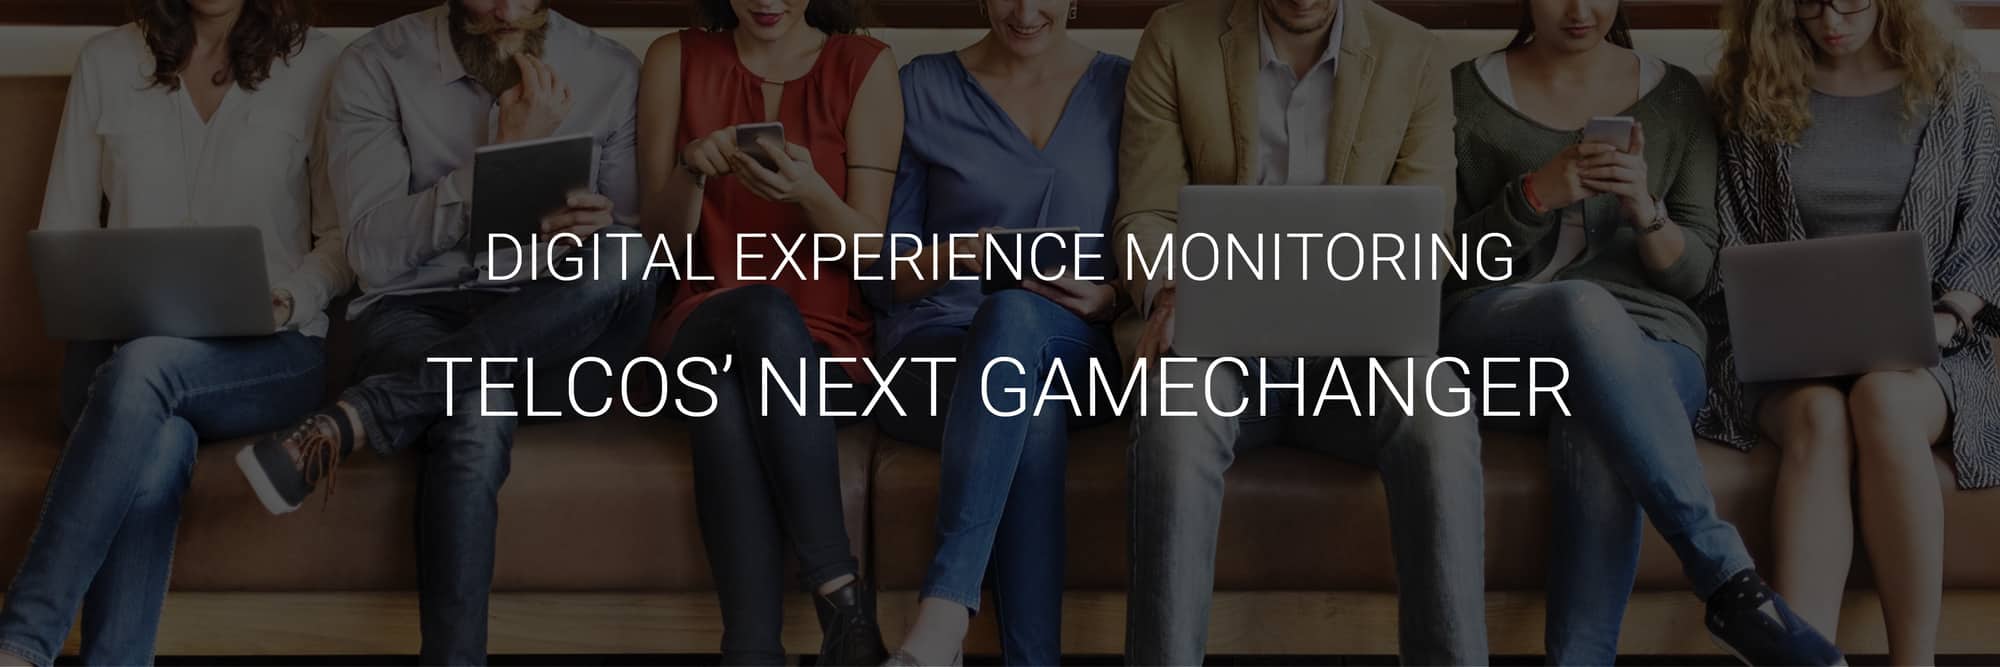 Digital Experience Monitoring - Telco's Next Gamechanger